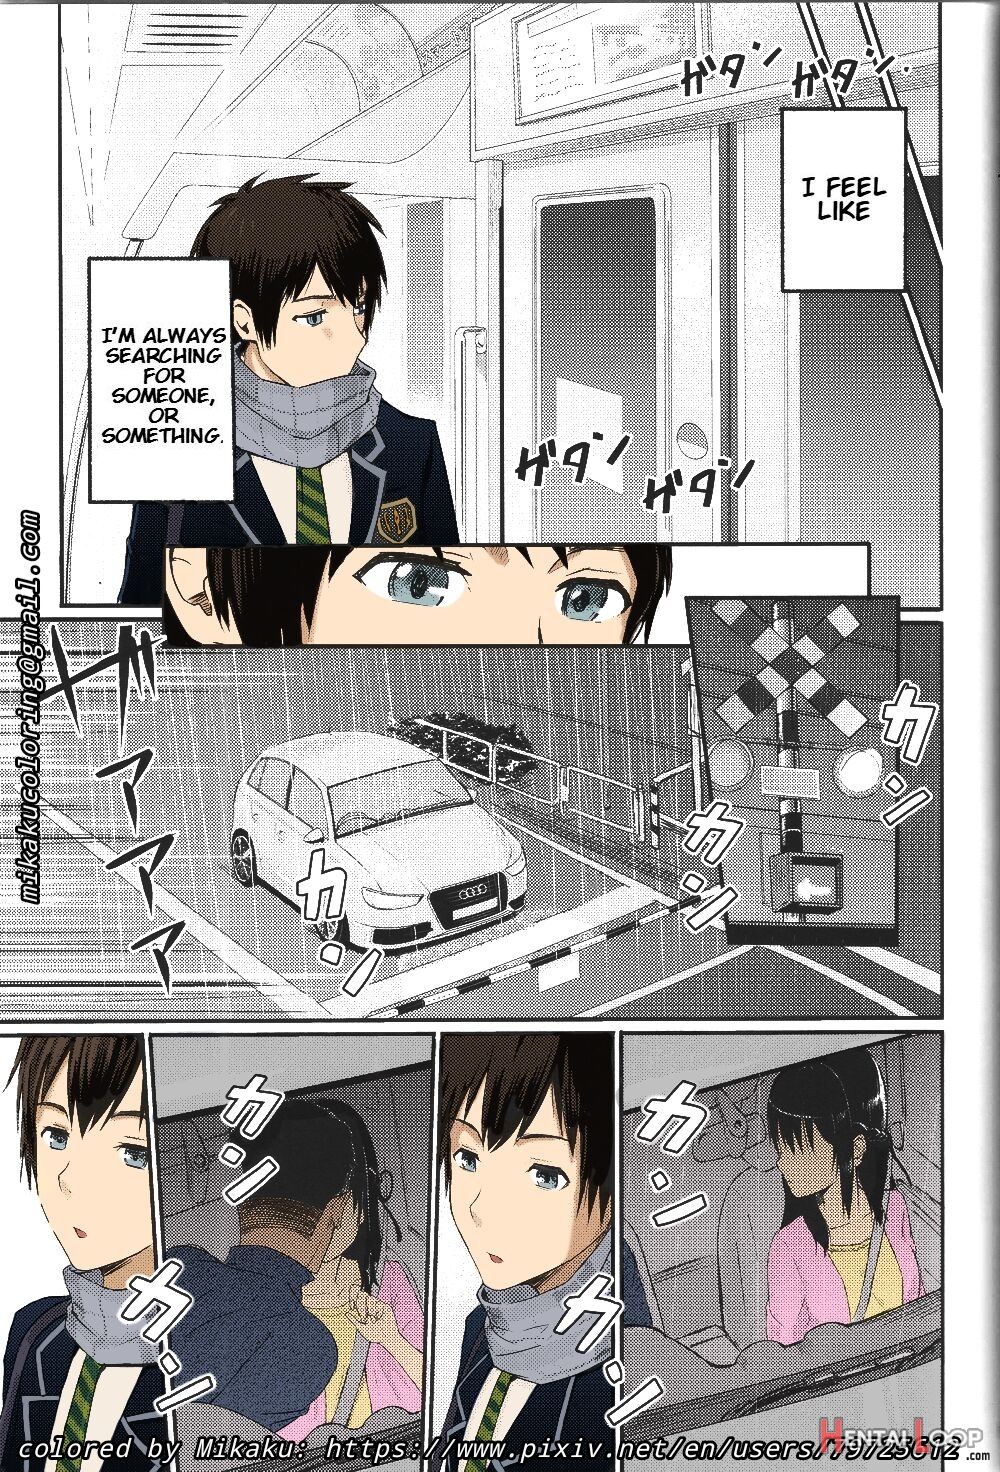 Kimi No Na Wa Your Name: After Story - Mitsuha Netorare Bad Ending page 1